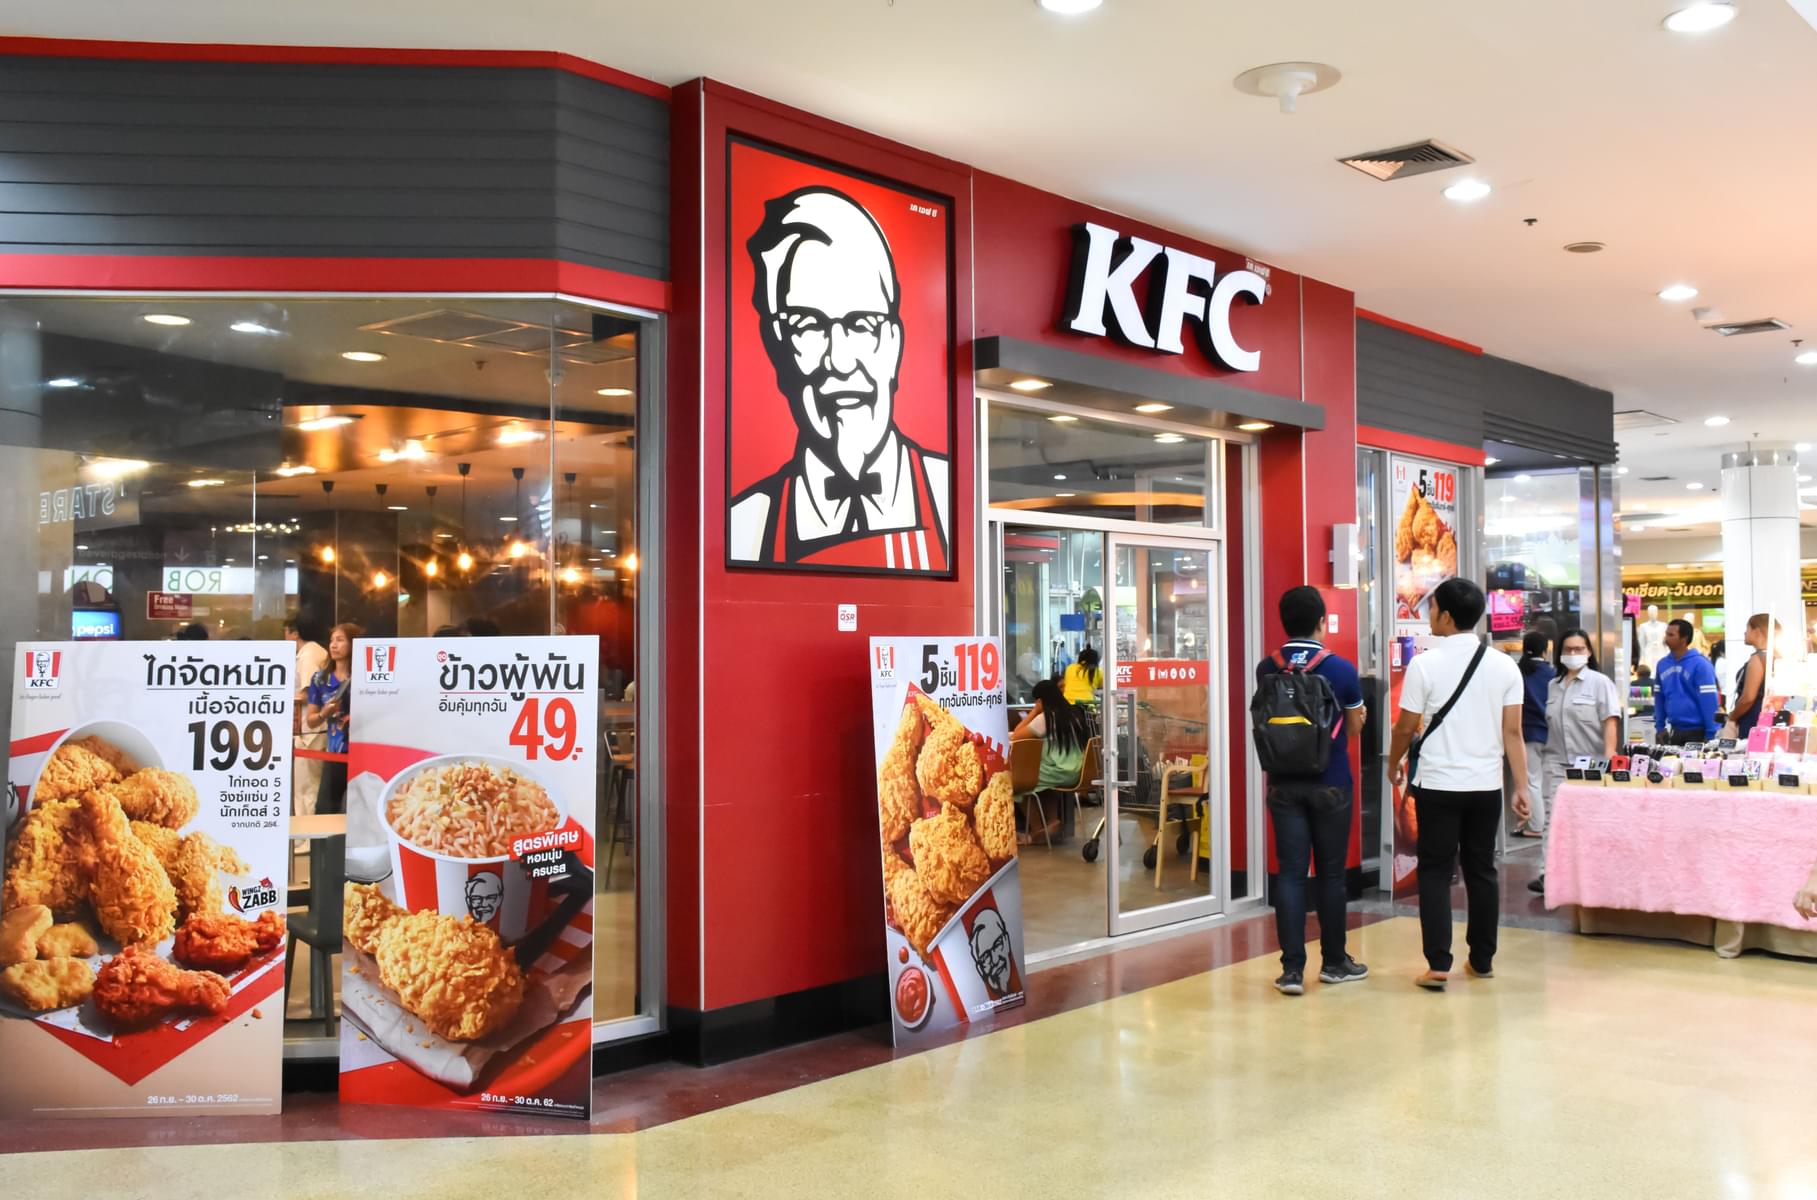 KFC - Most People’s Choice QSR